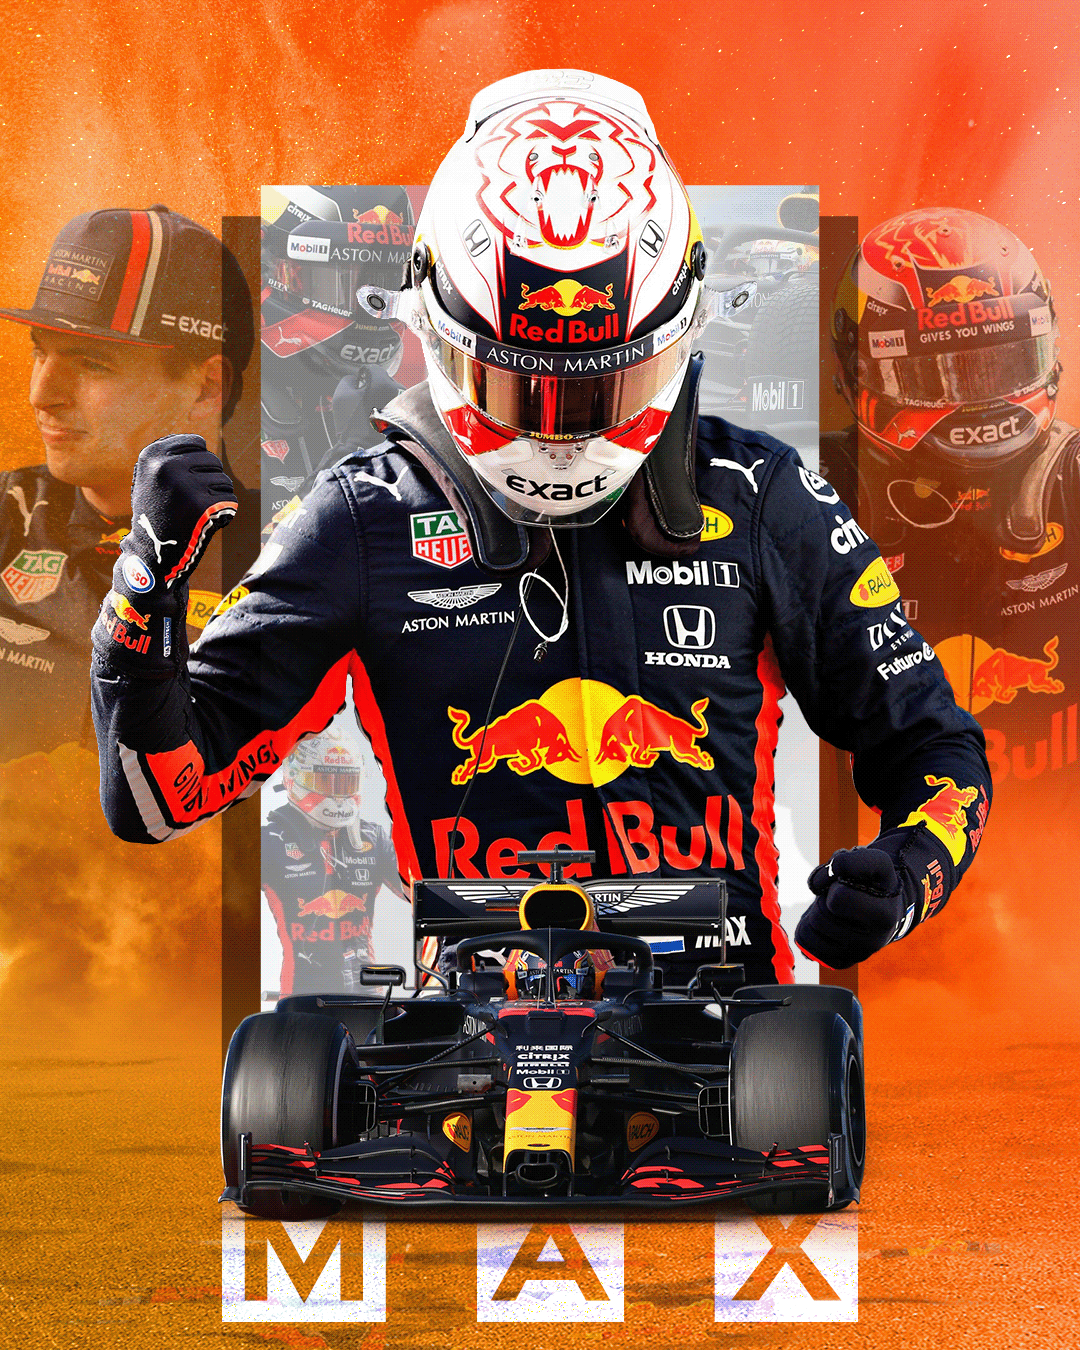  F1 Red Bull racing wallpaper   Wallery